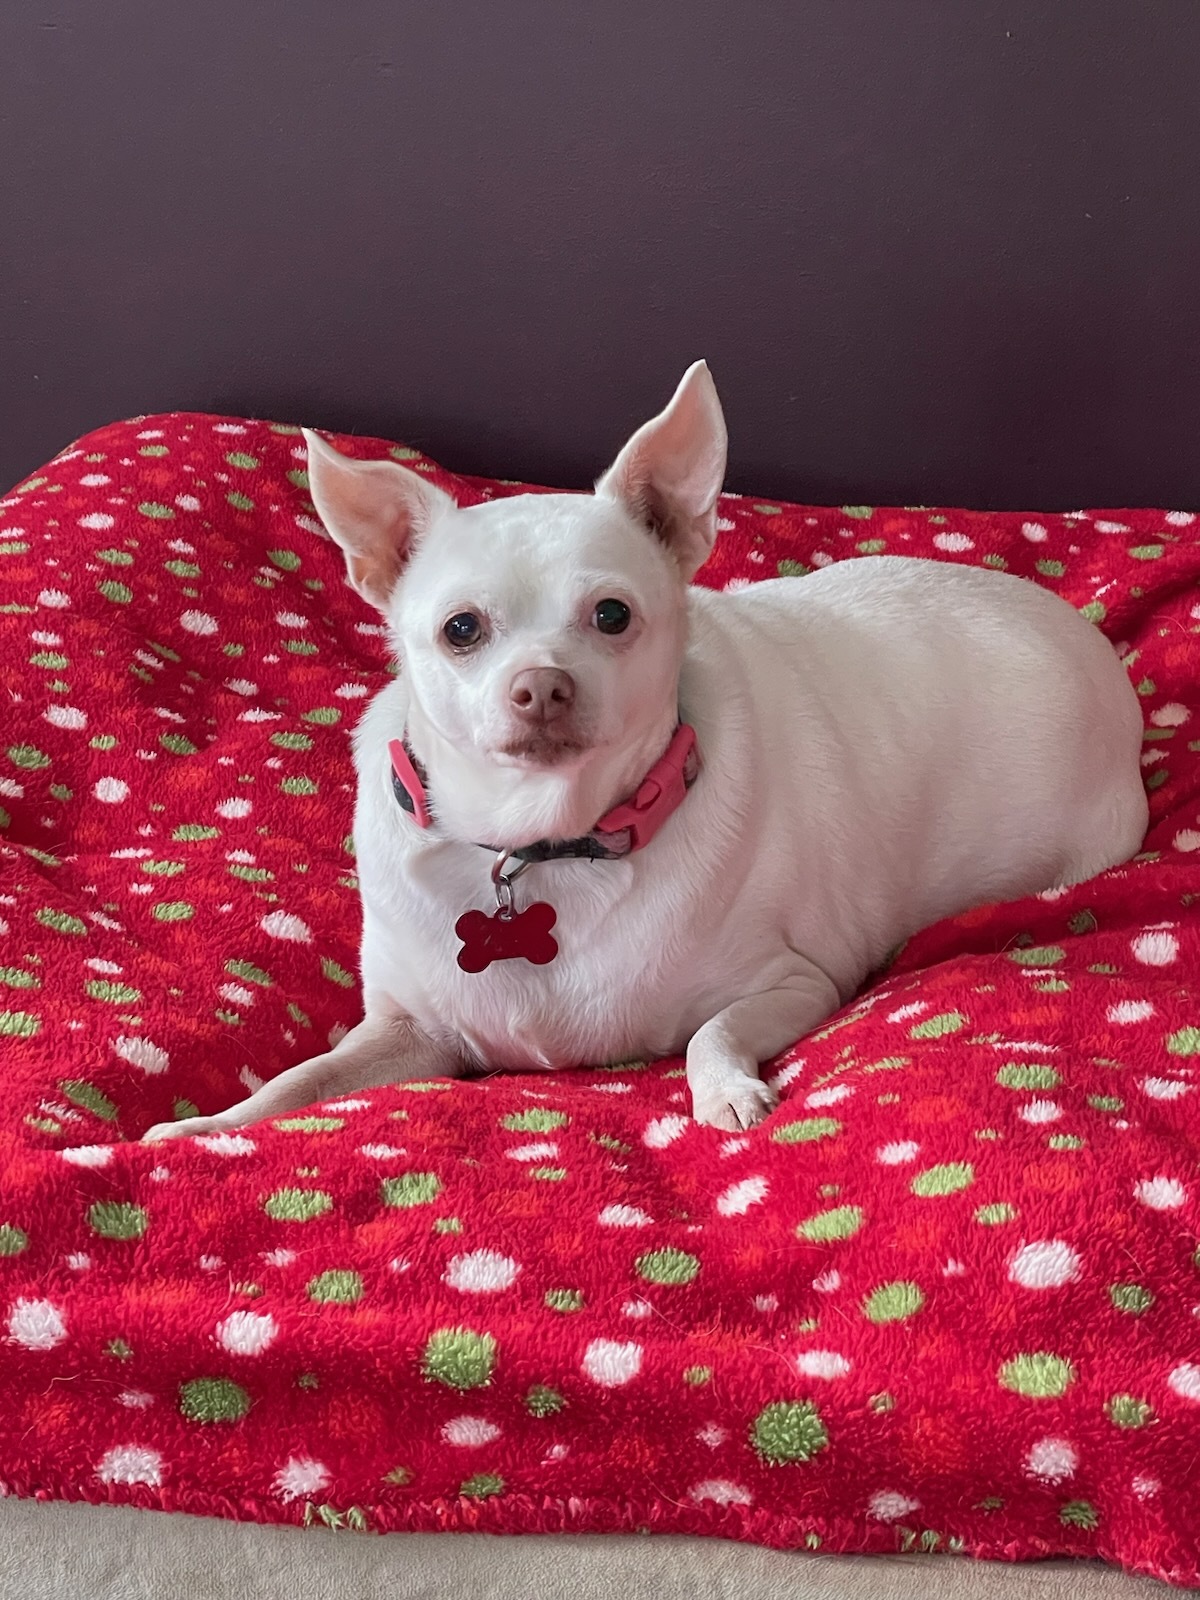 Summer, an adoptable Chihuahua in Shawnee, KS, 66218 | Photo Image 2